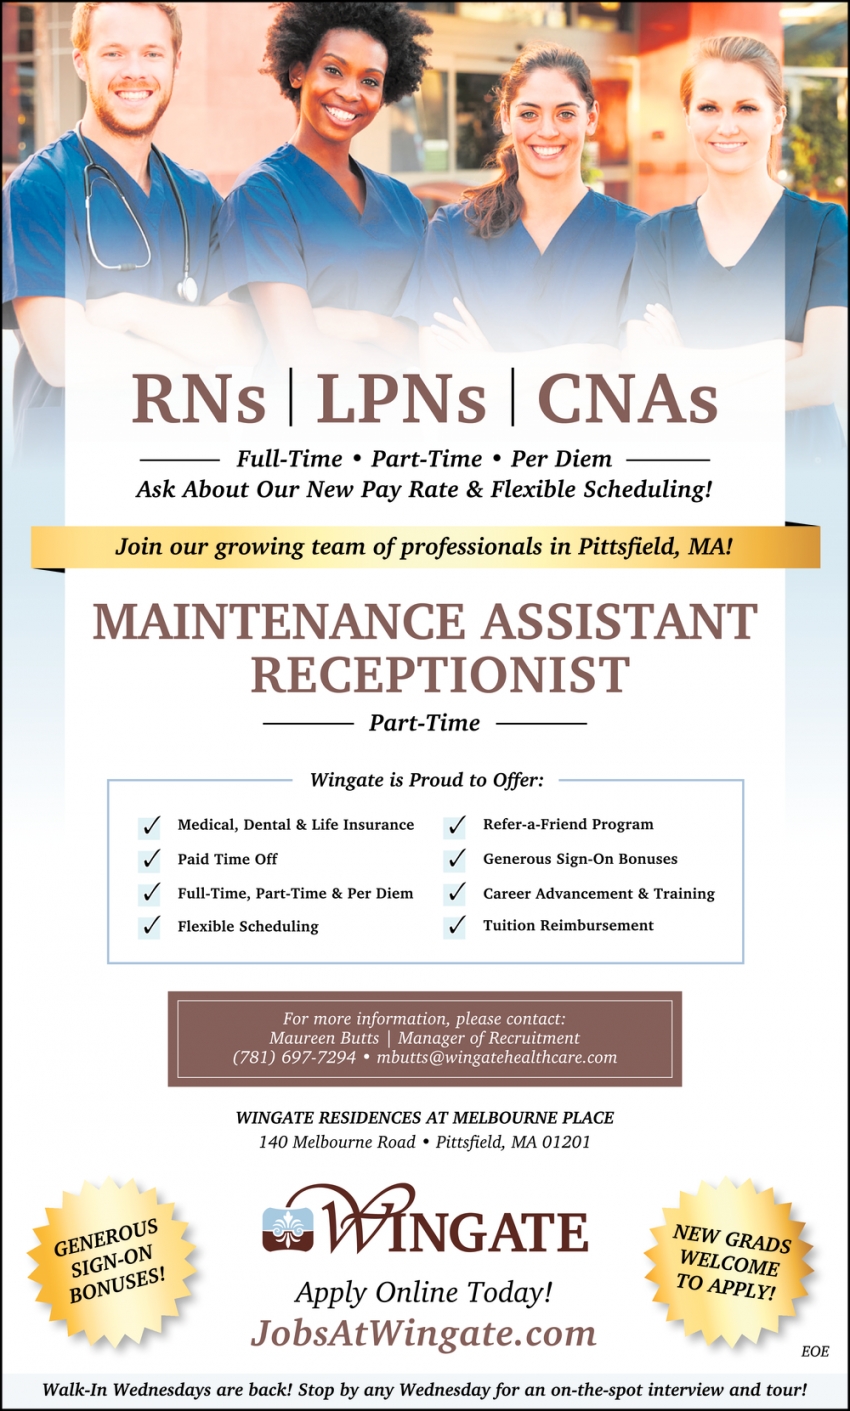 RNs, LPNs, CNAs, Wingate Healthcare, Needham, MA